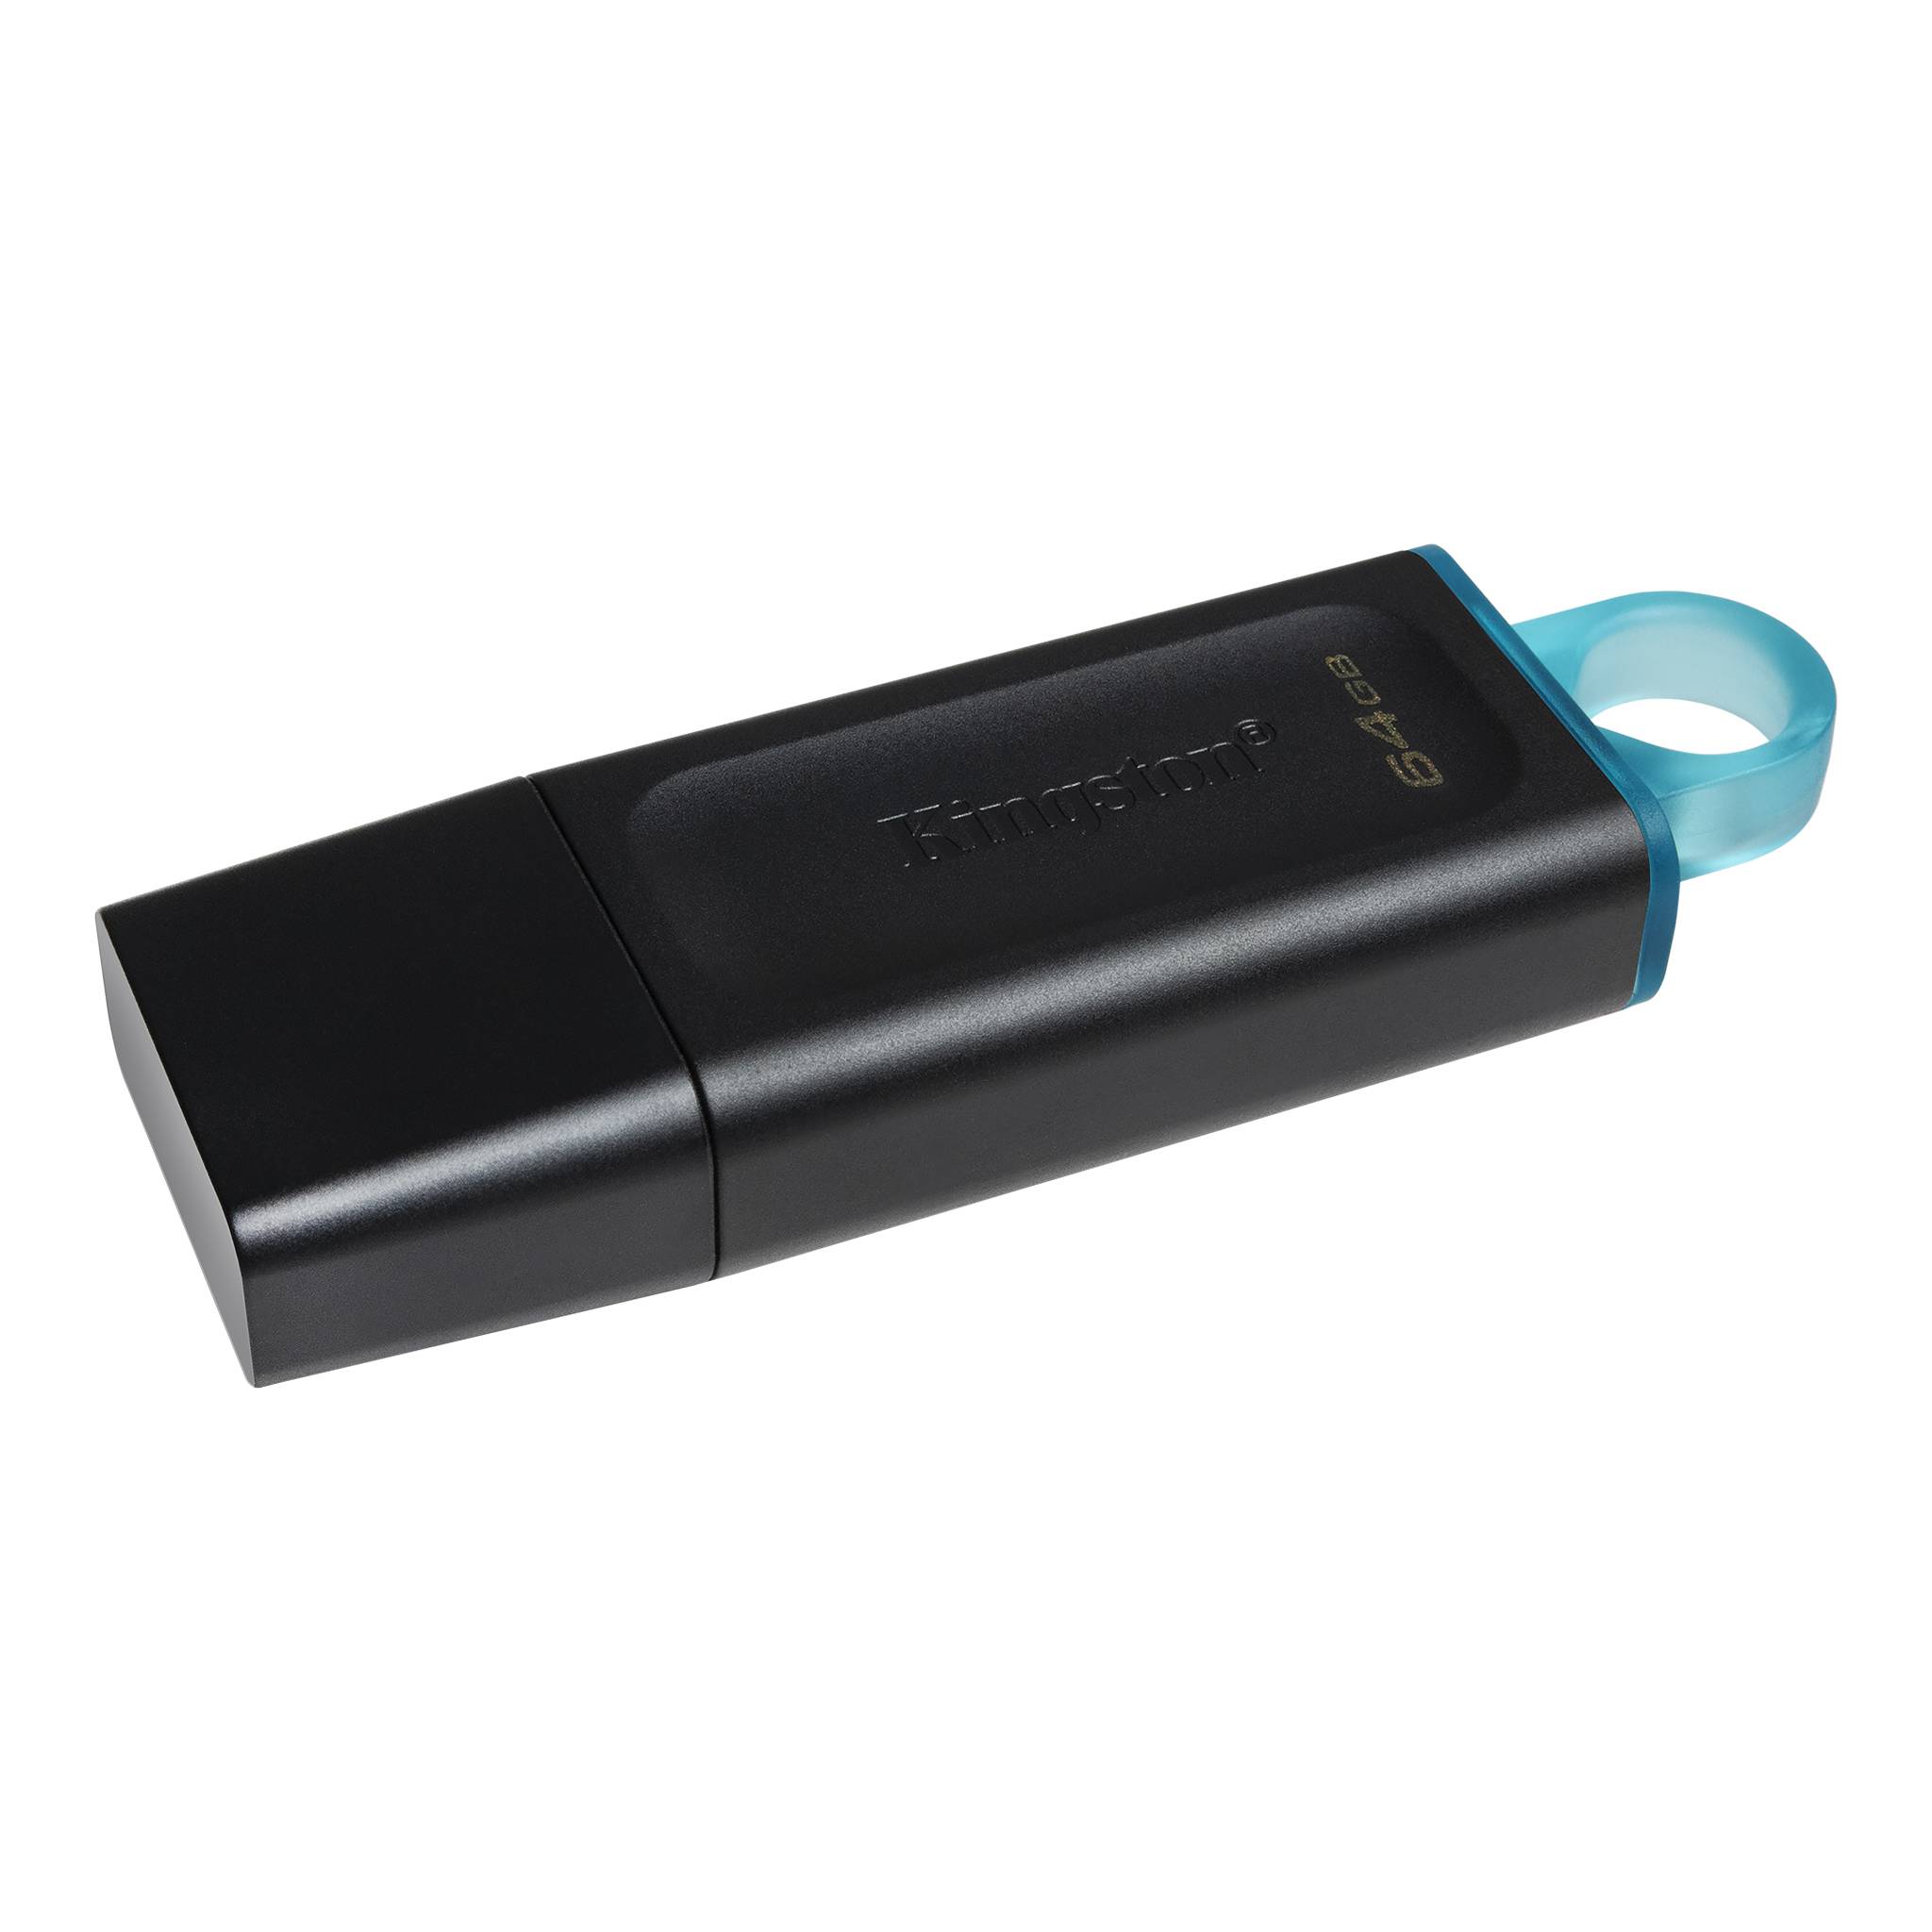 DataTraveler Exodia - USB 3.2 Flash Drive - Kingston Technology